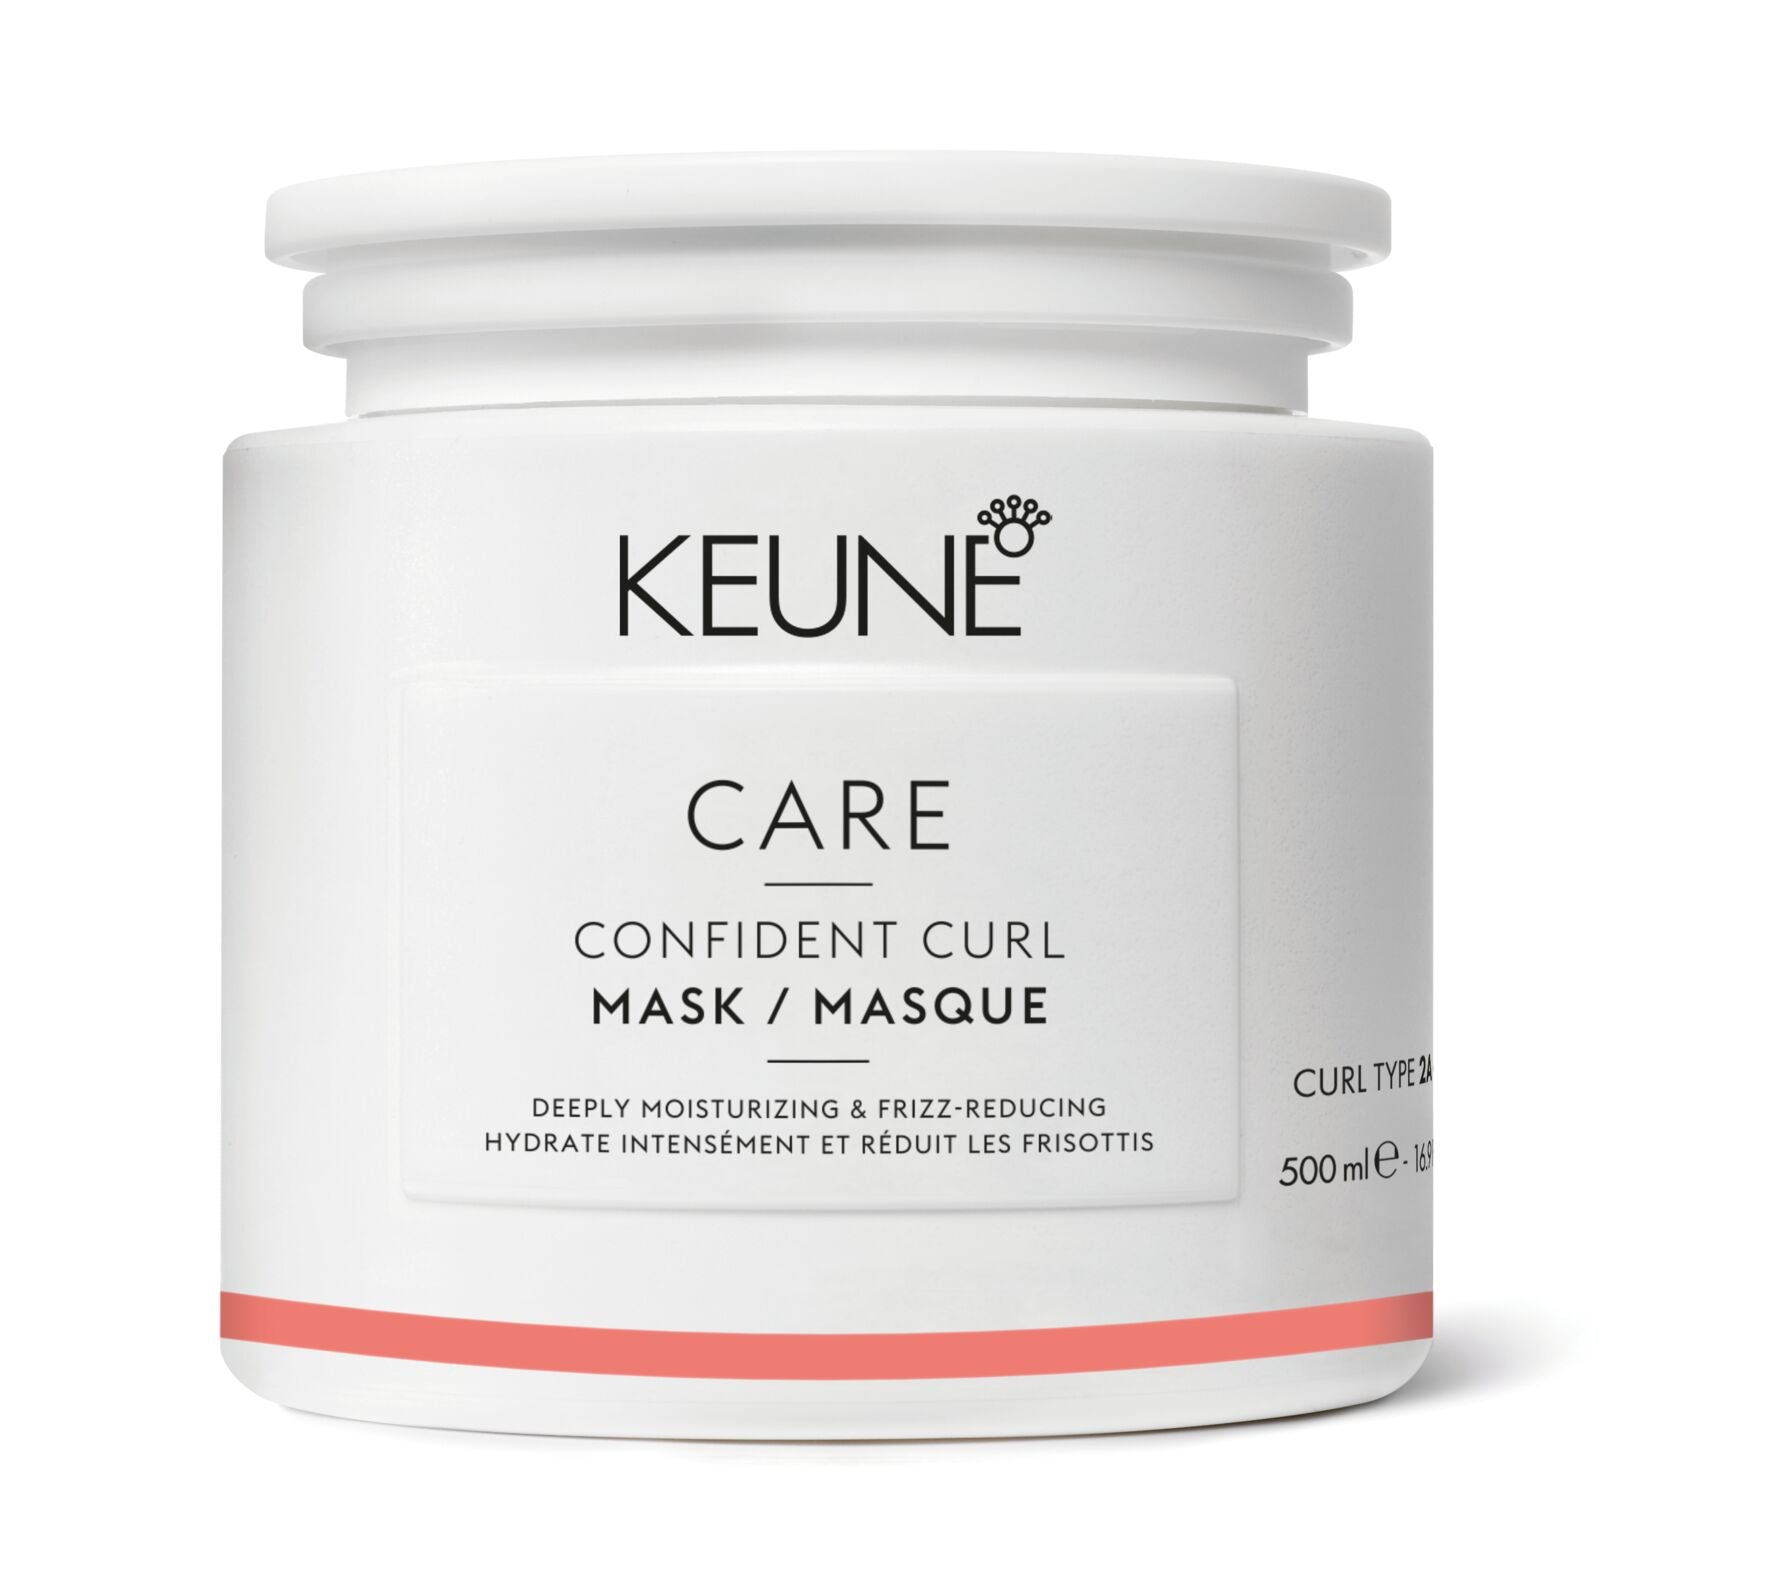 Keune Care Confident Curl Mask CFH Care For Hair #500ml